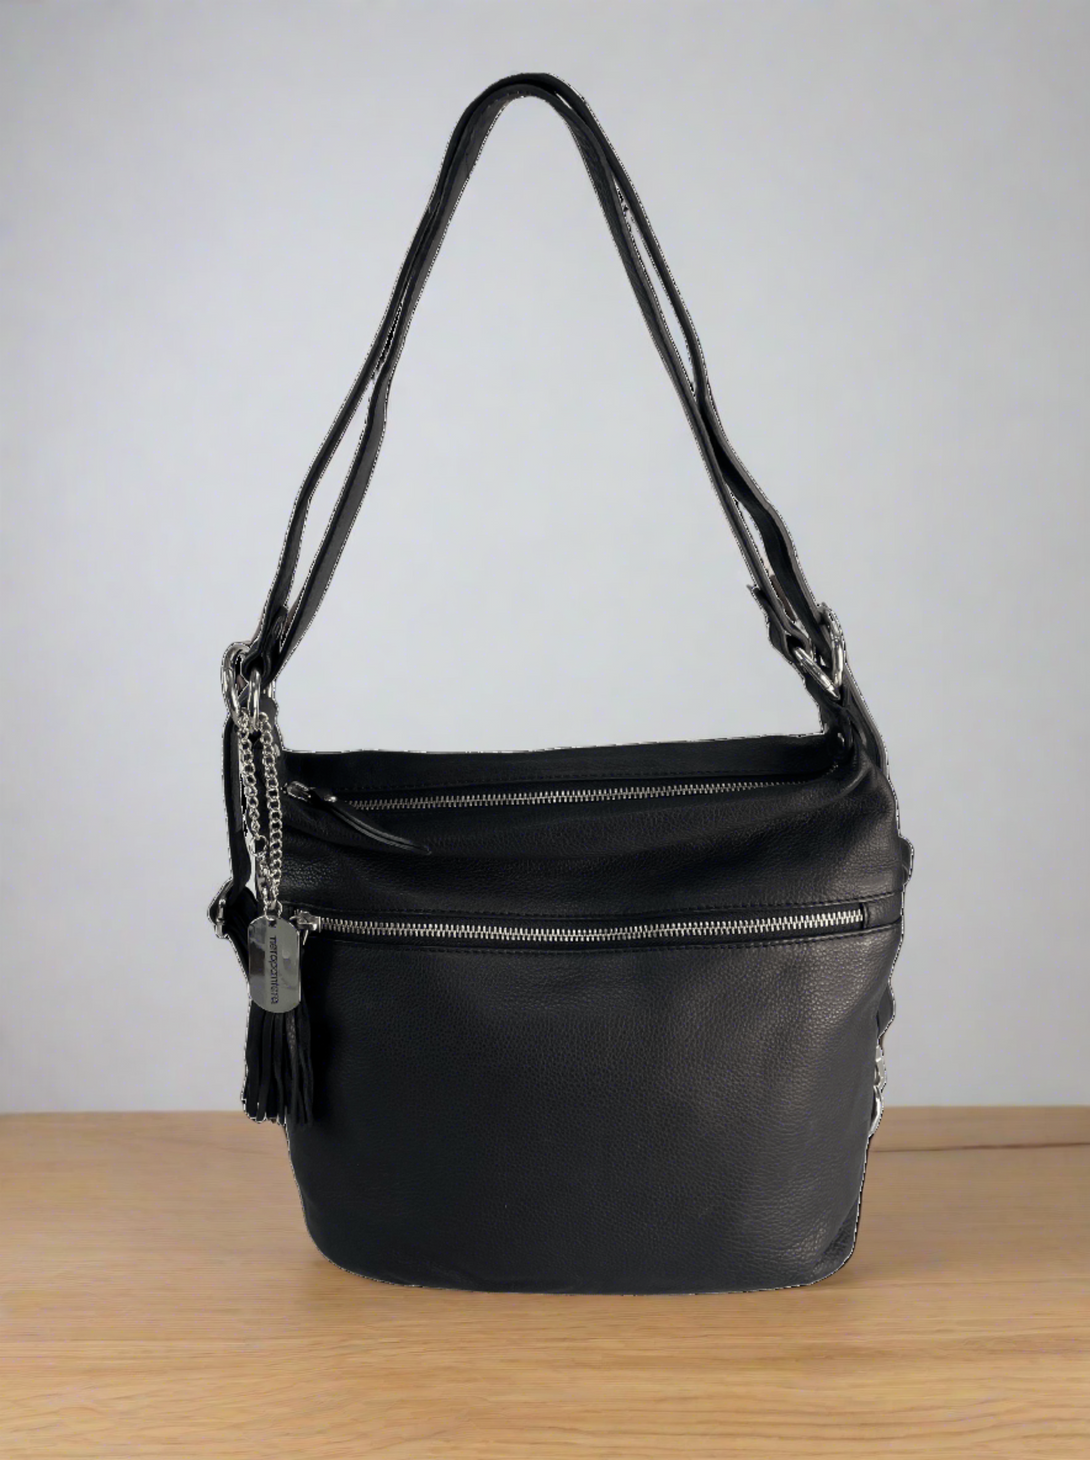 Genuine Leather Hobo Style Handbag